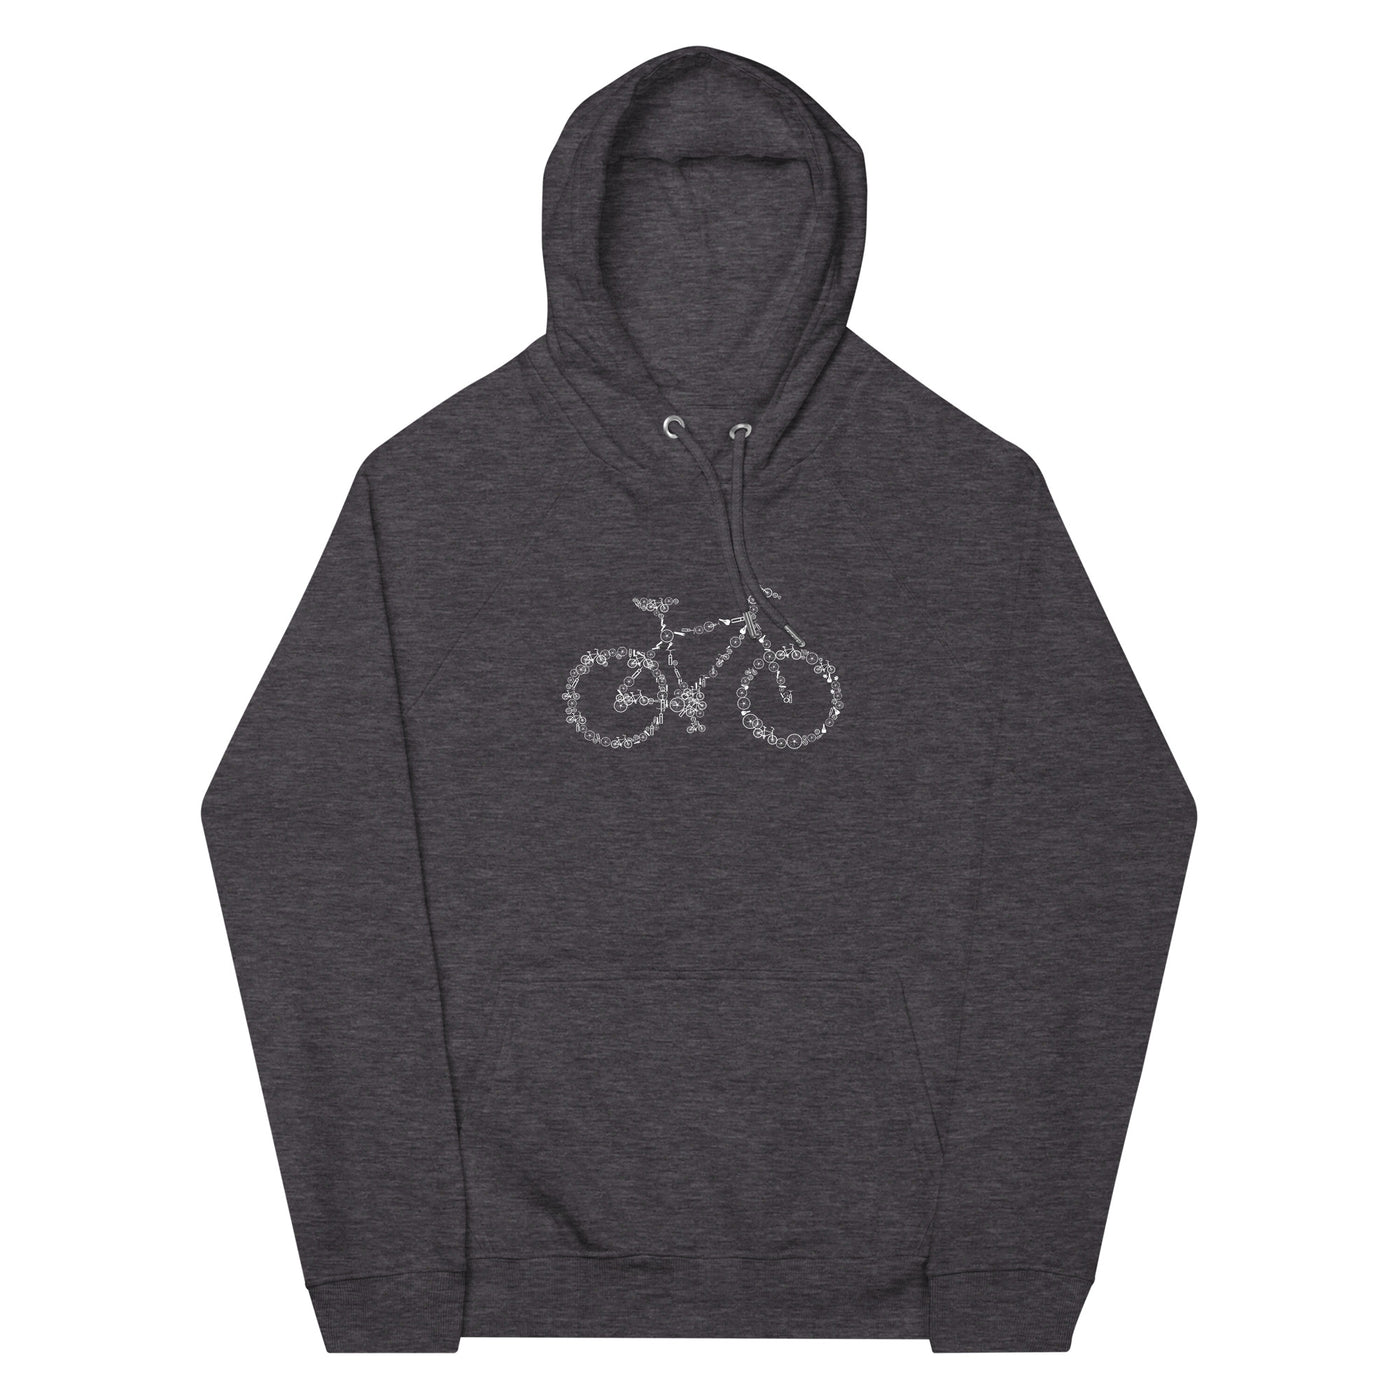 Fahrrad Kollektiv - Unisex Premium Organic Hoodie fahrrad mountainbike Charcoal Melange